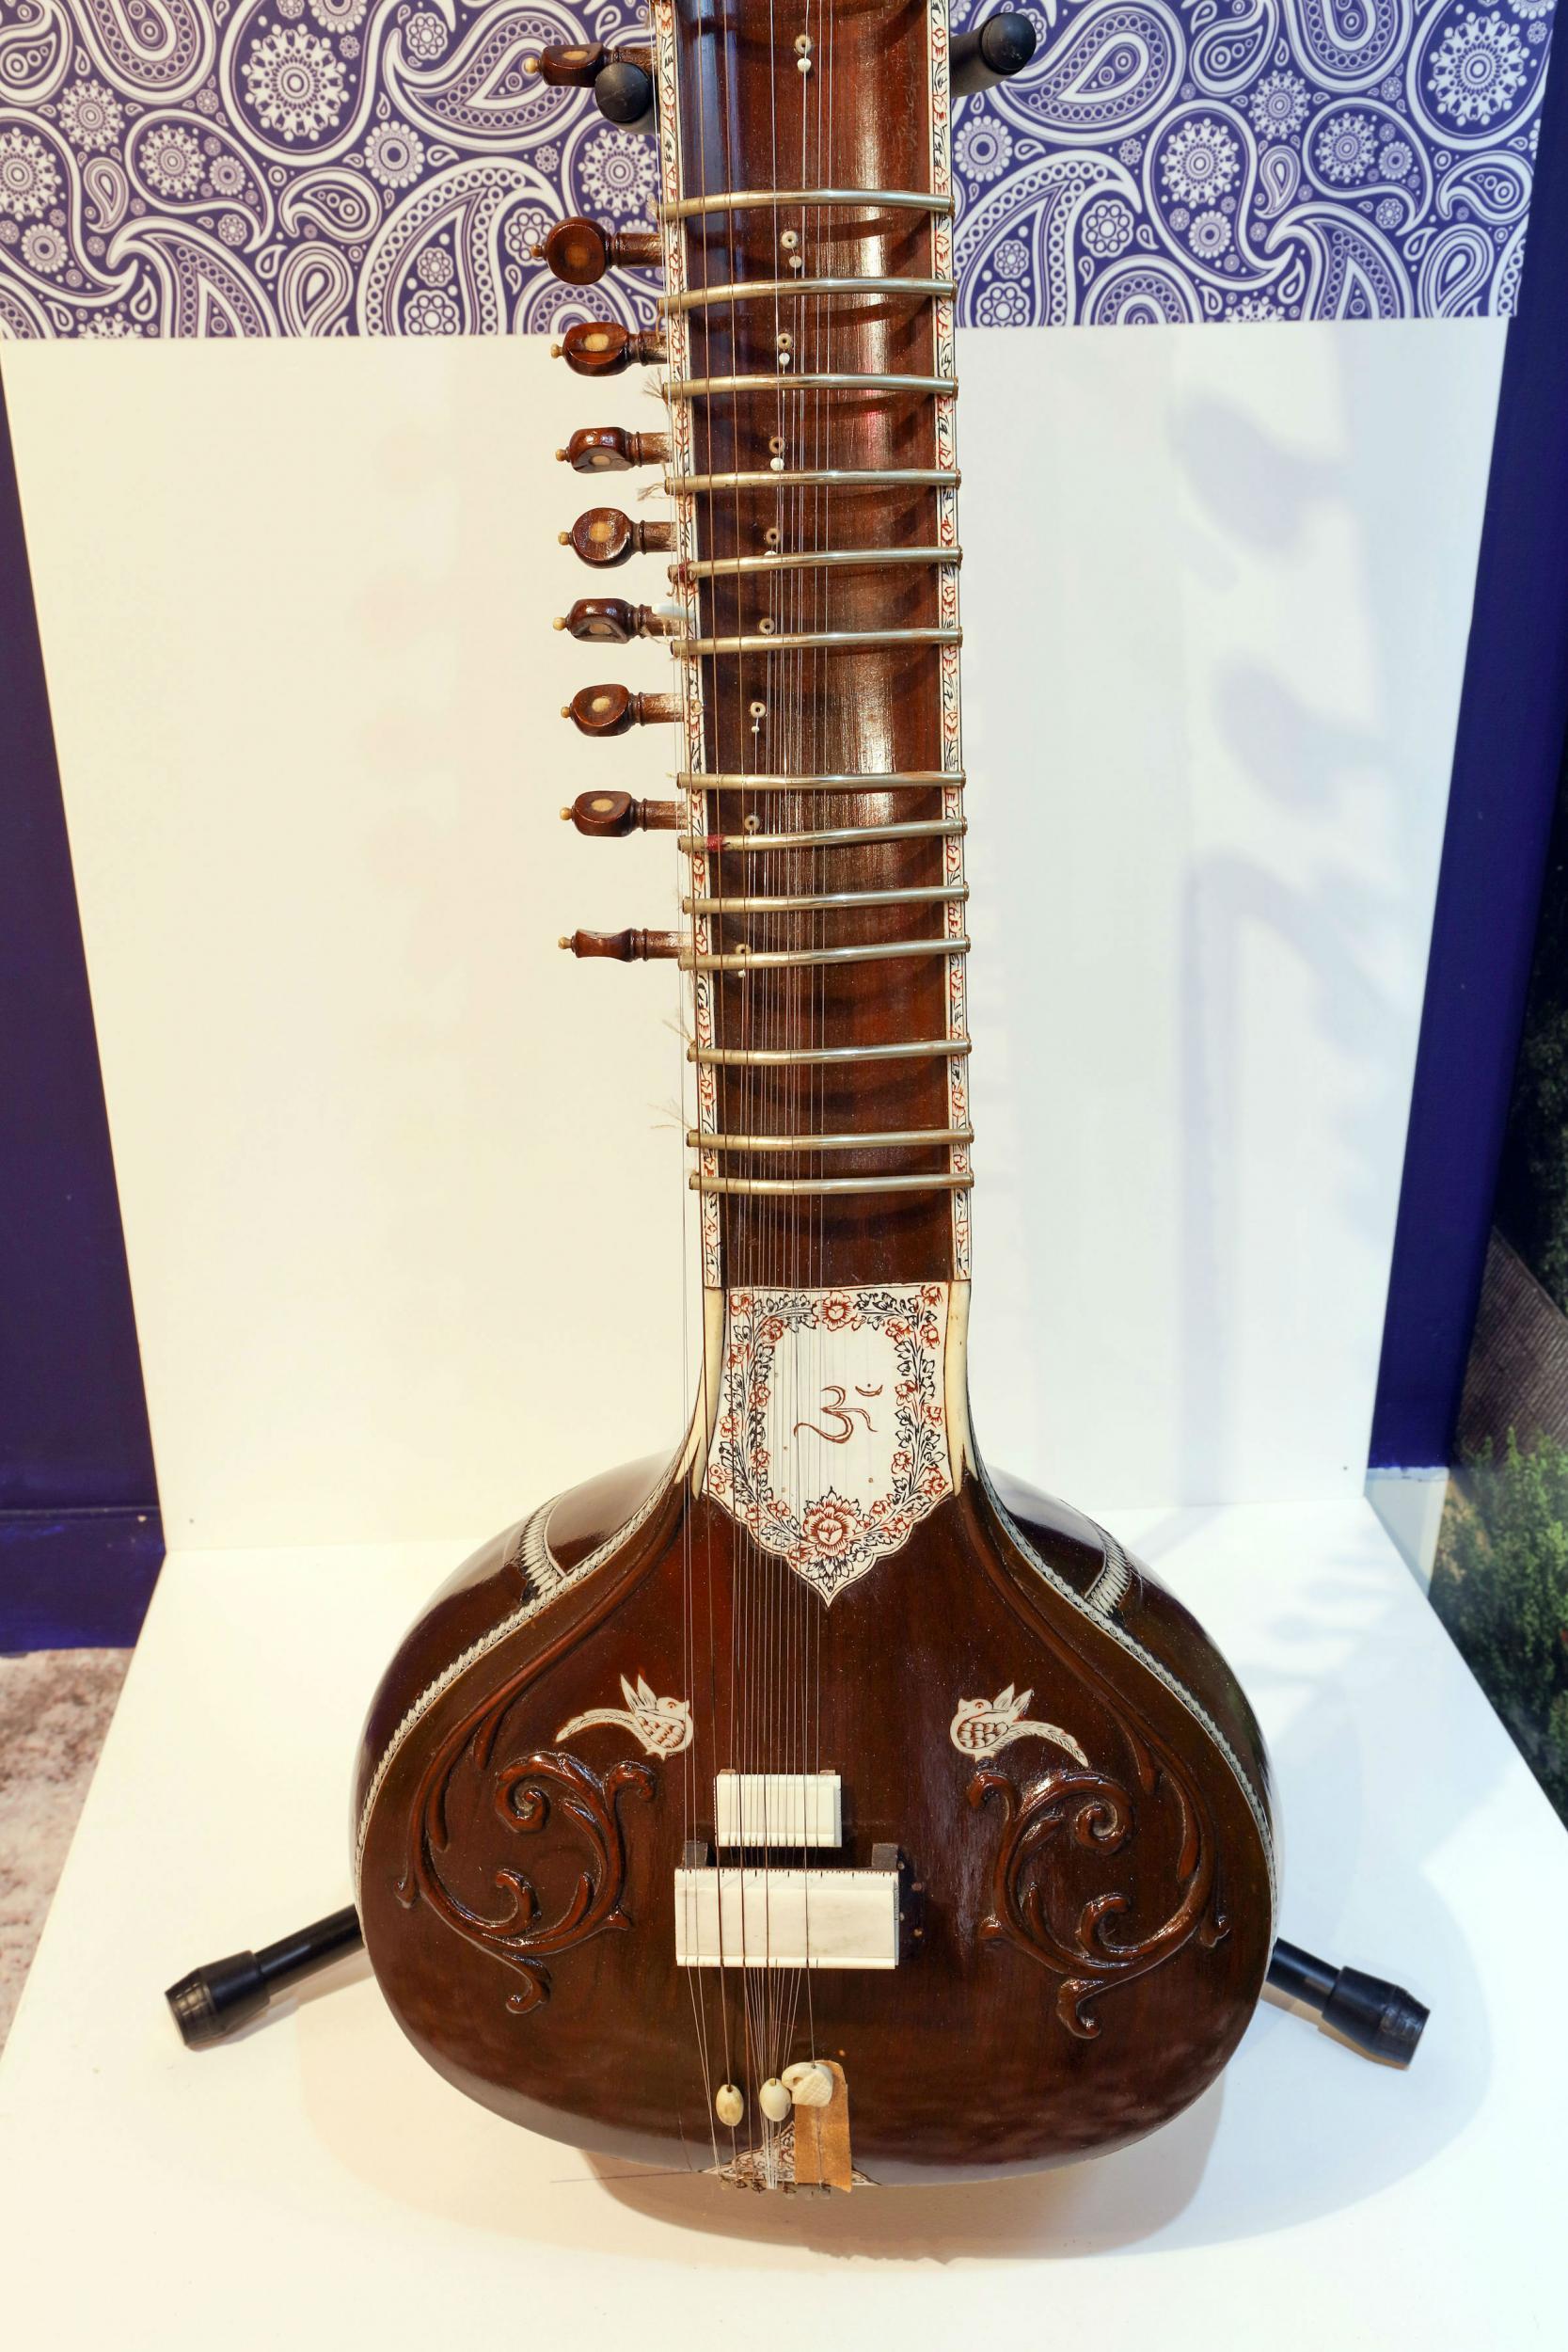 Ravi Shankar’s sitar on display at the Beatles in India show